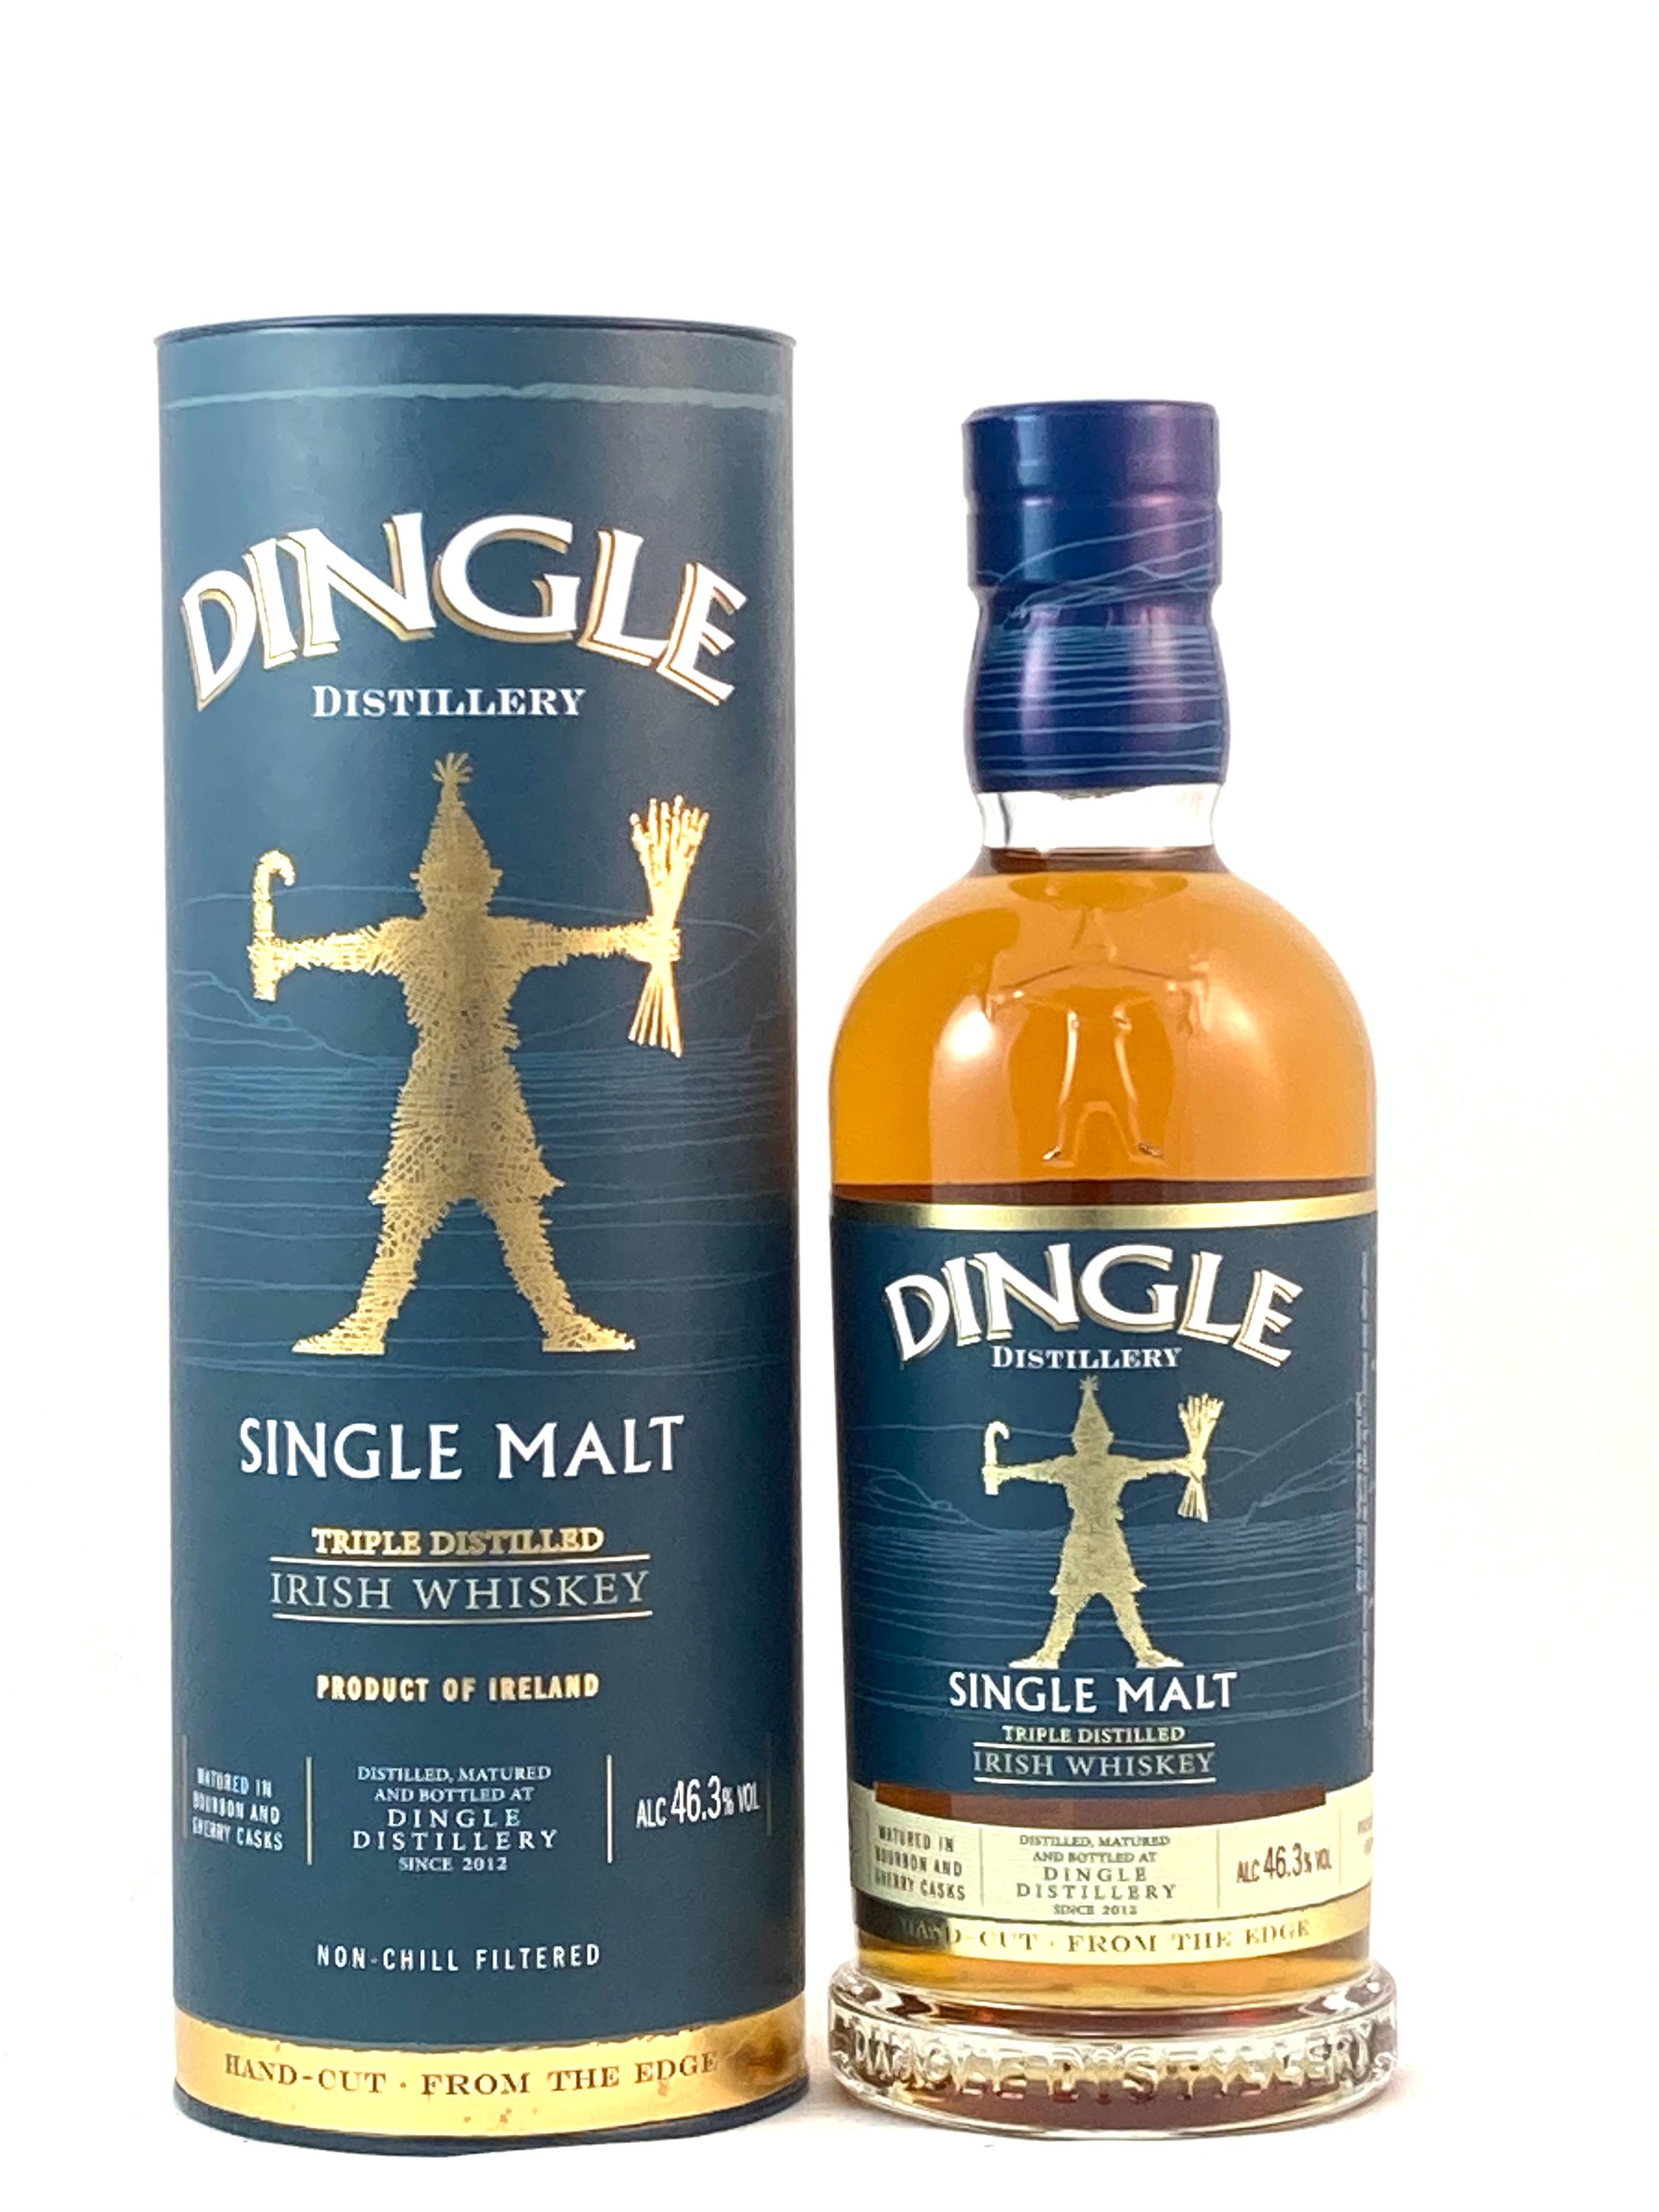 Dingle Single Malt Irish Whiskey Triple Distilled 0.7l, alc. 46.3% by volume